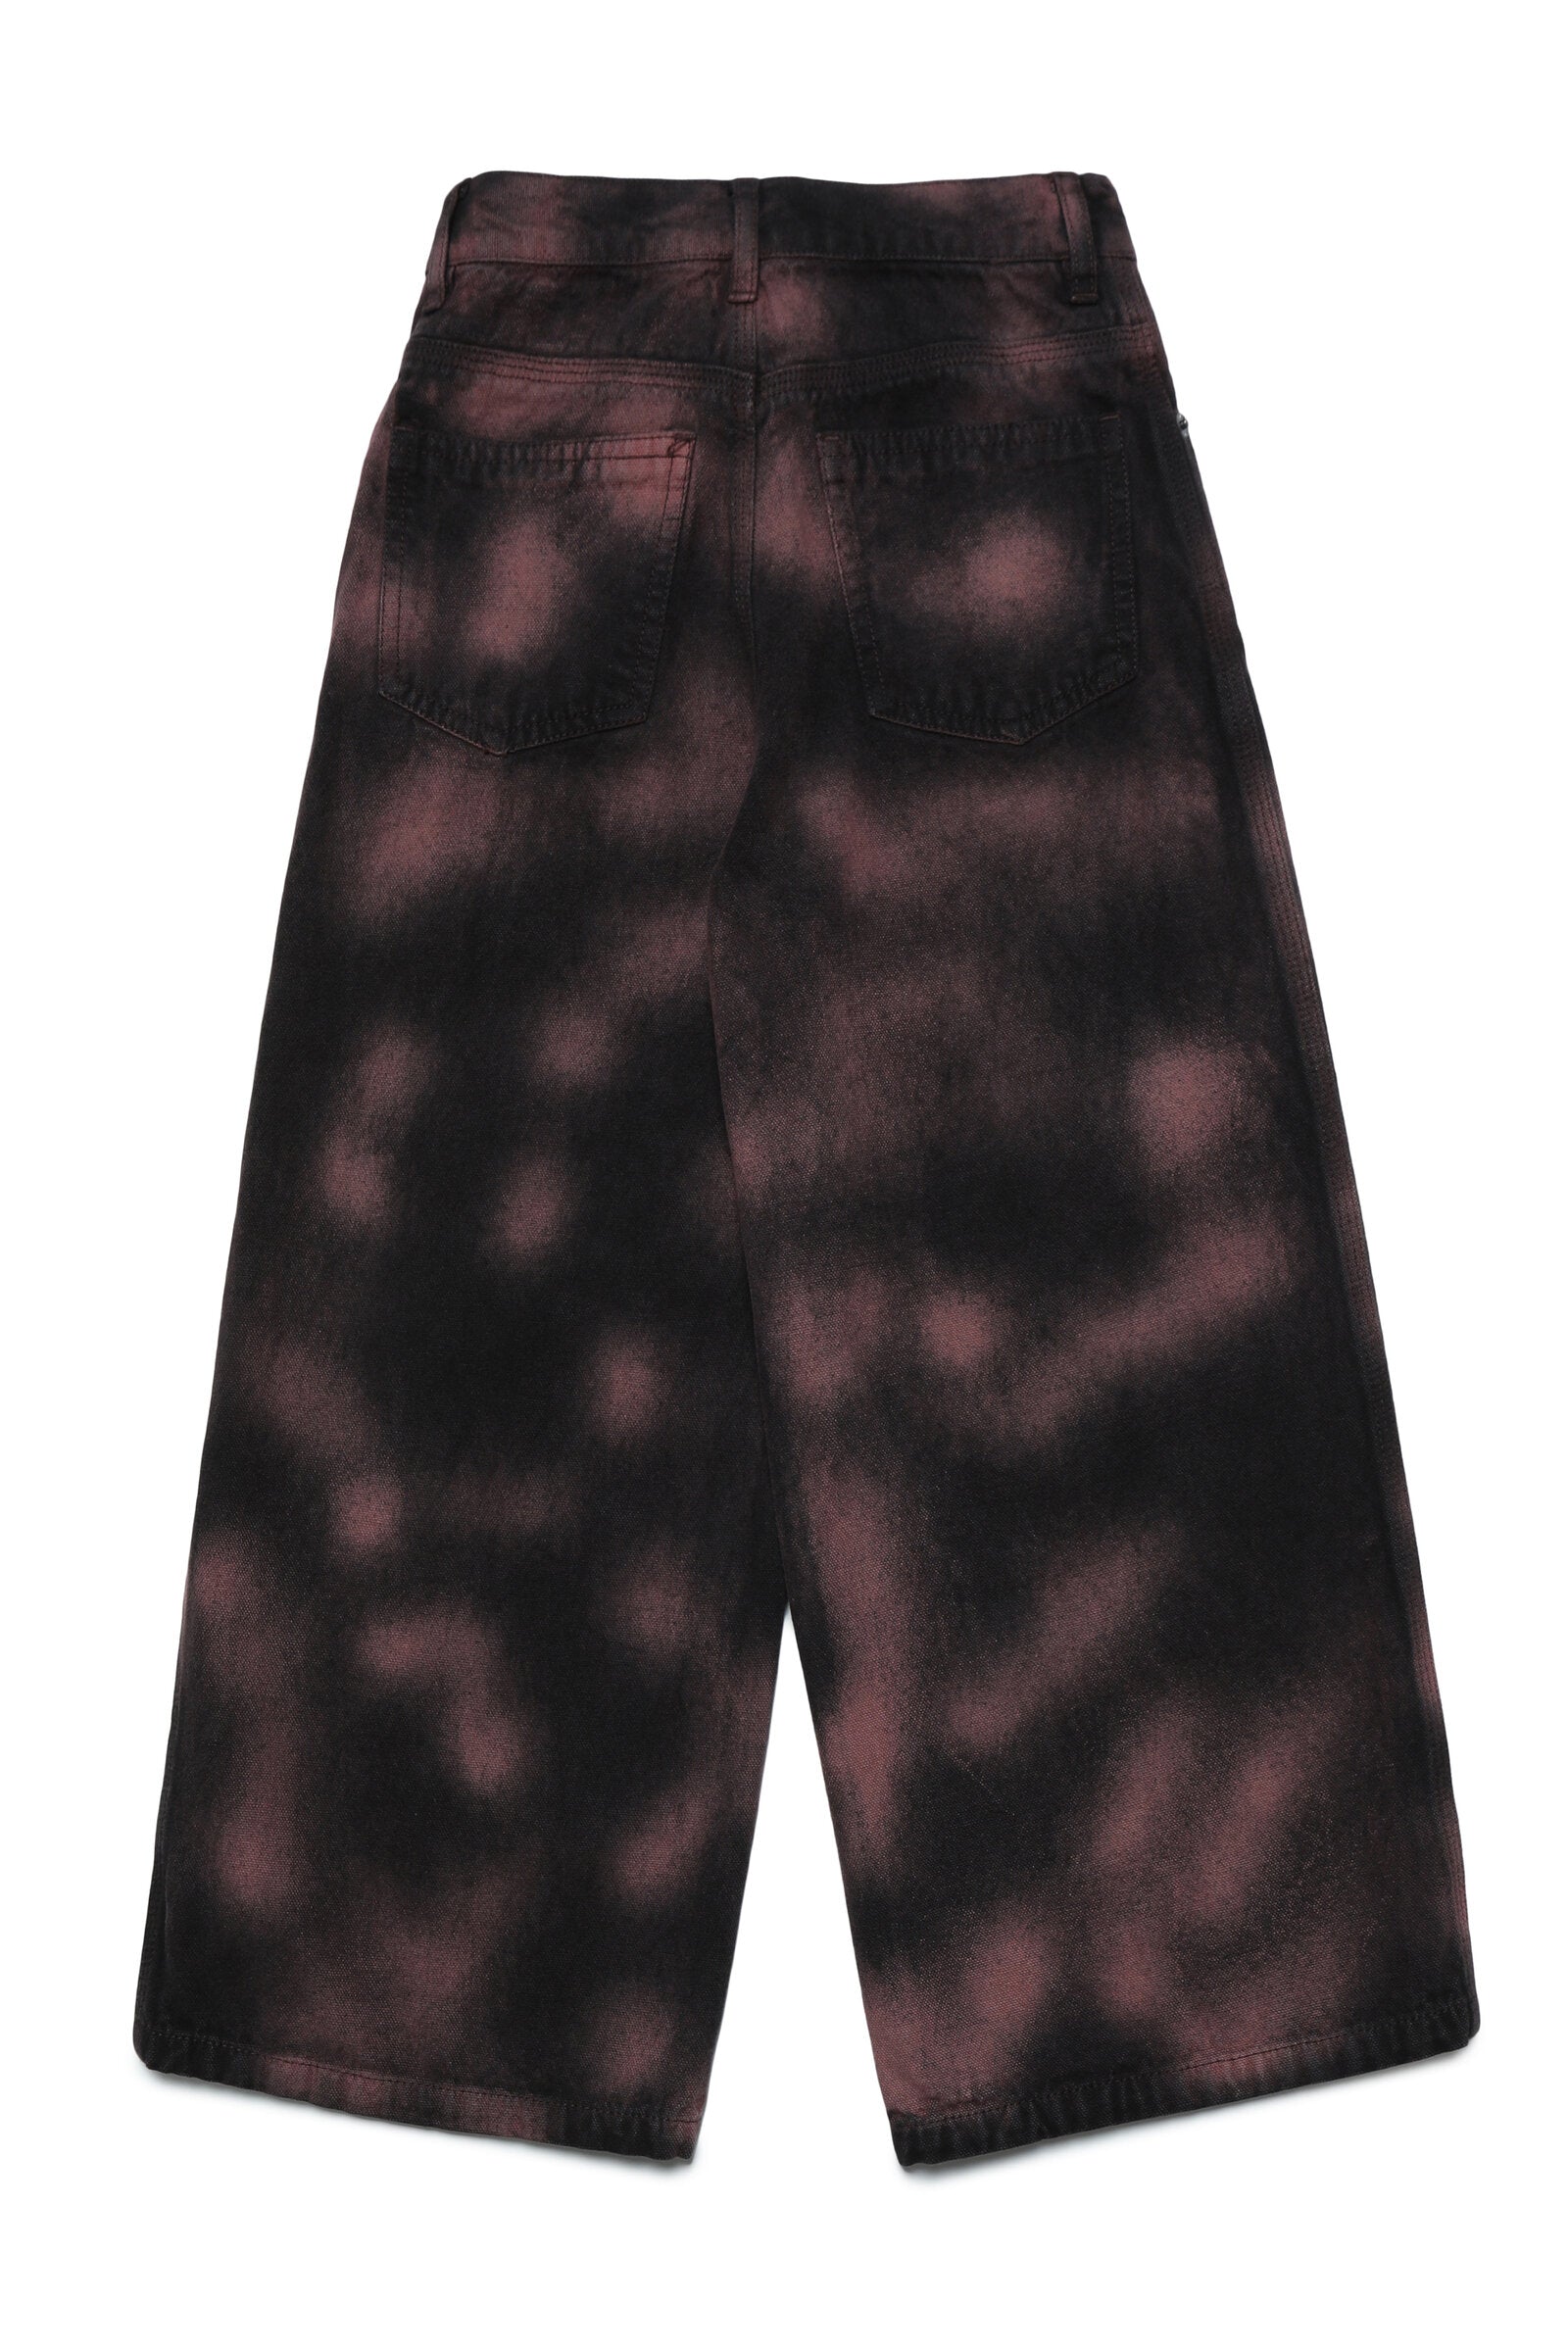 Black denim pants with pink spray effect